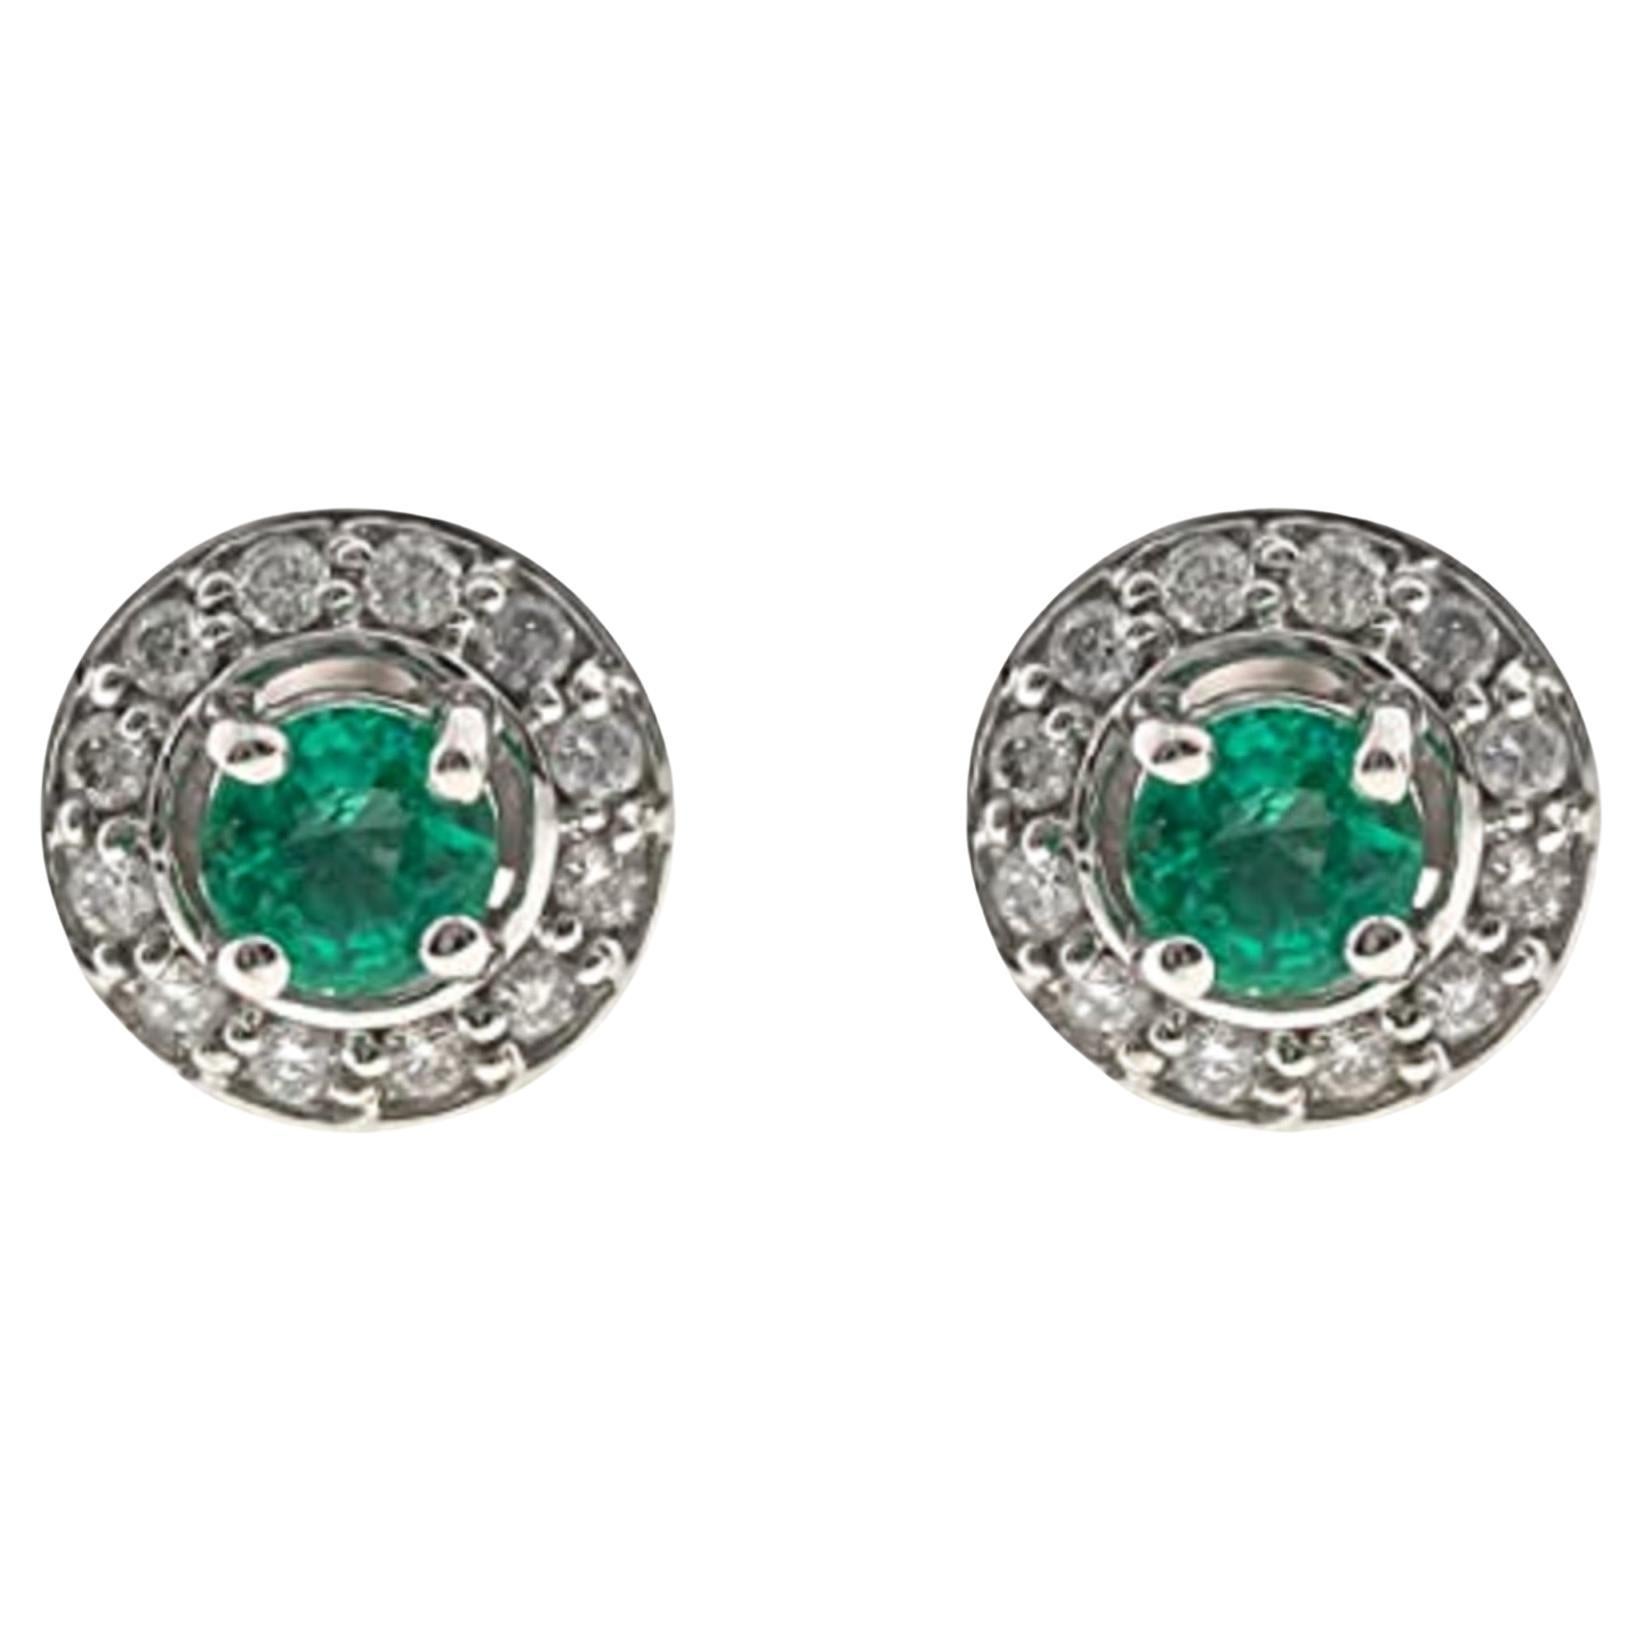 Gin & Grace 10K White Gold Natural Zambian Emerald Stud Earrings with Diamond